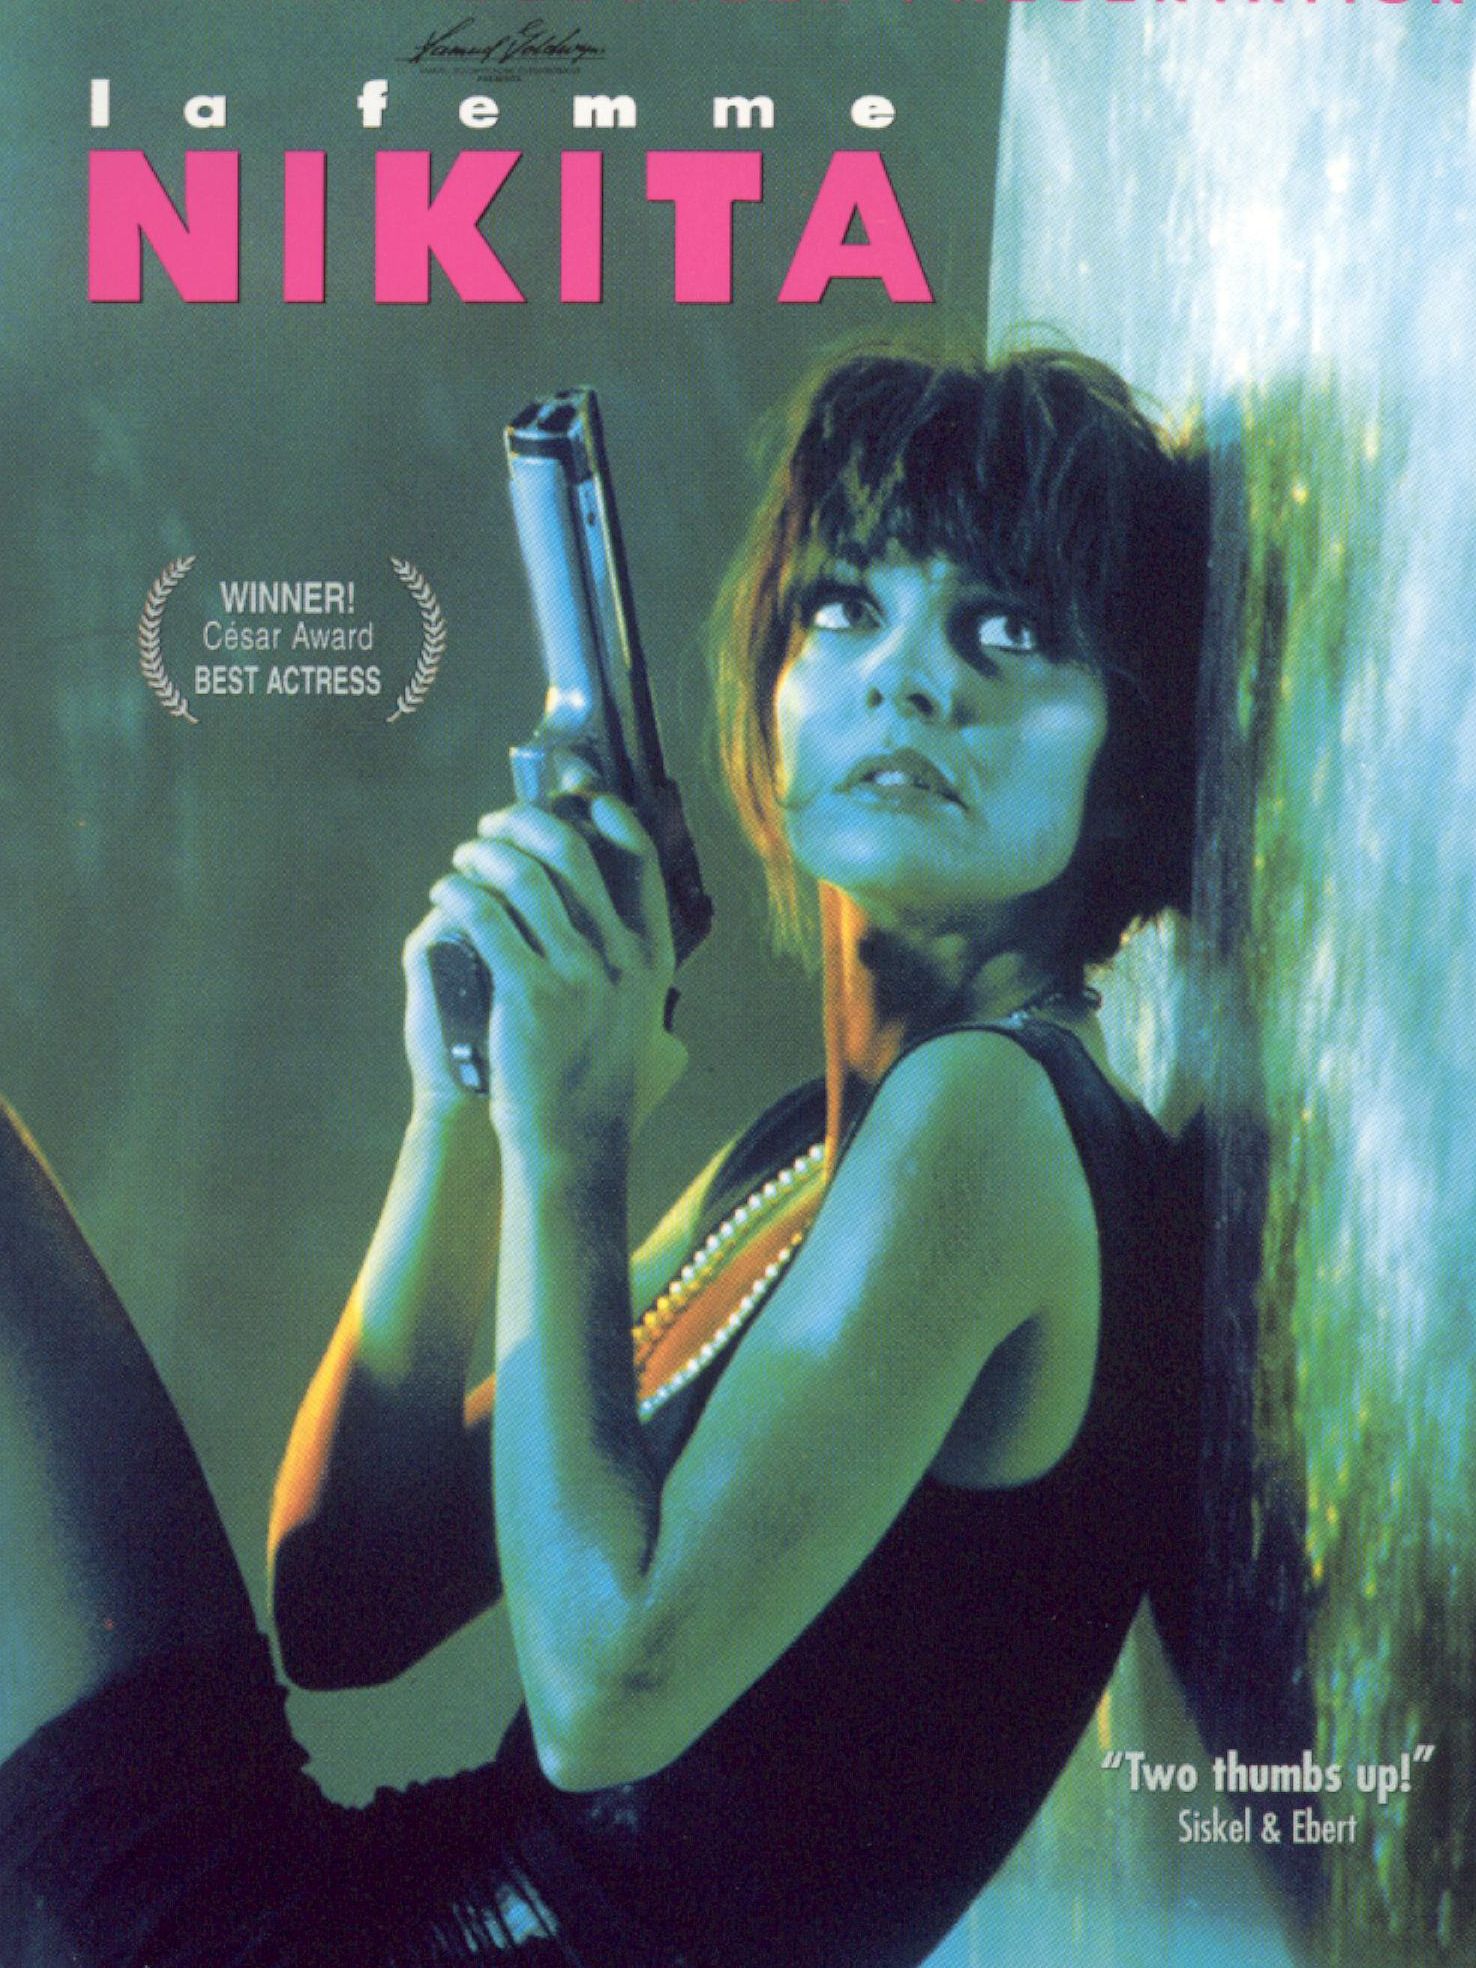 la femme nikita movie - Nikita Winner! Co And 3. Best Actress "Two thumbs up! Siskel & Ebert